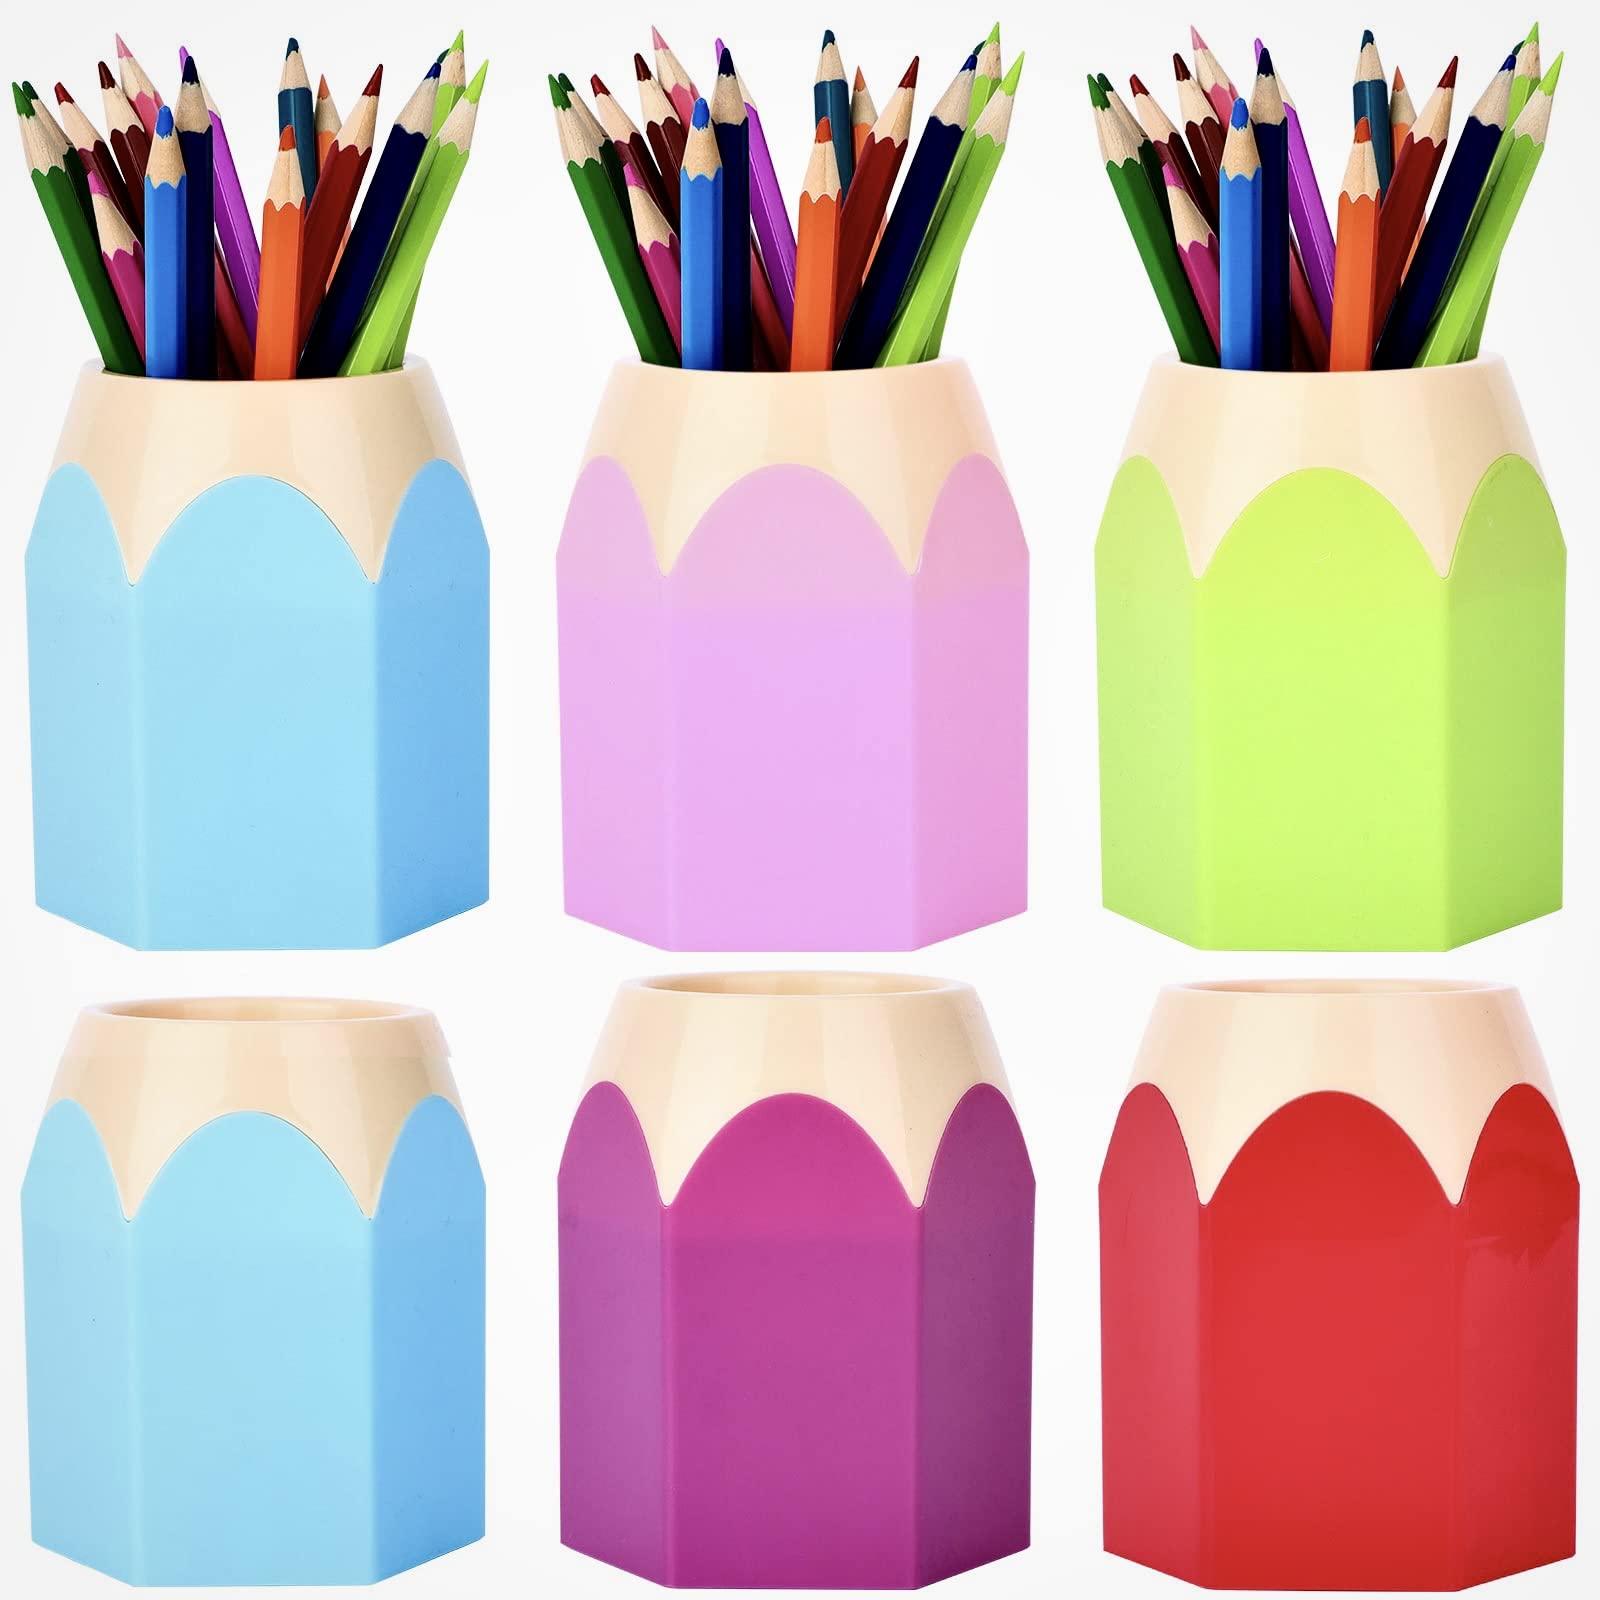 6 soportes para bolígrafos con forma de lápiz